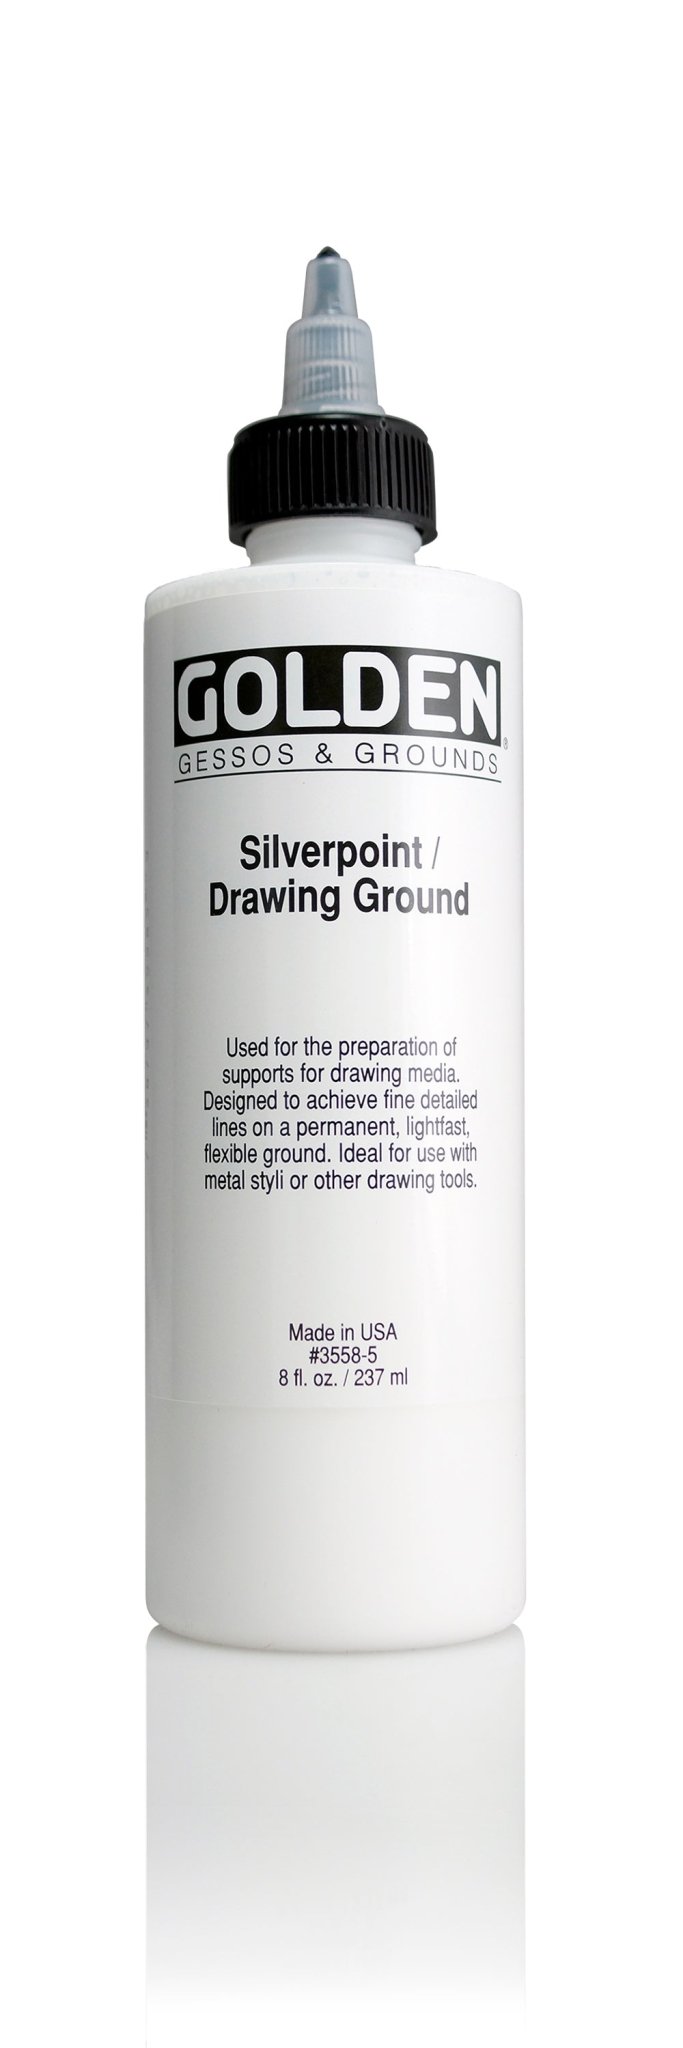 Golden Silverpoint / Drawing Ground 237ml - theartshop.com.au